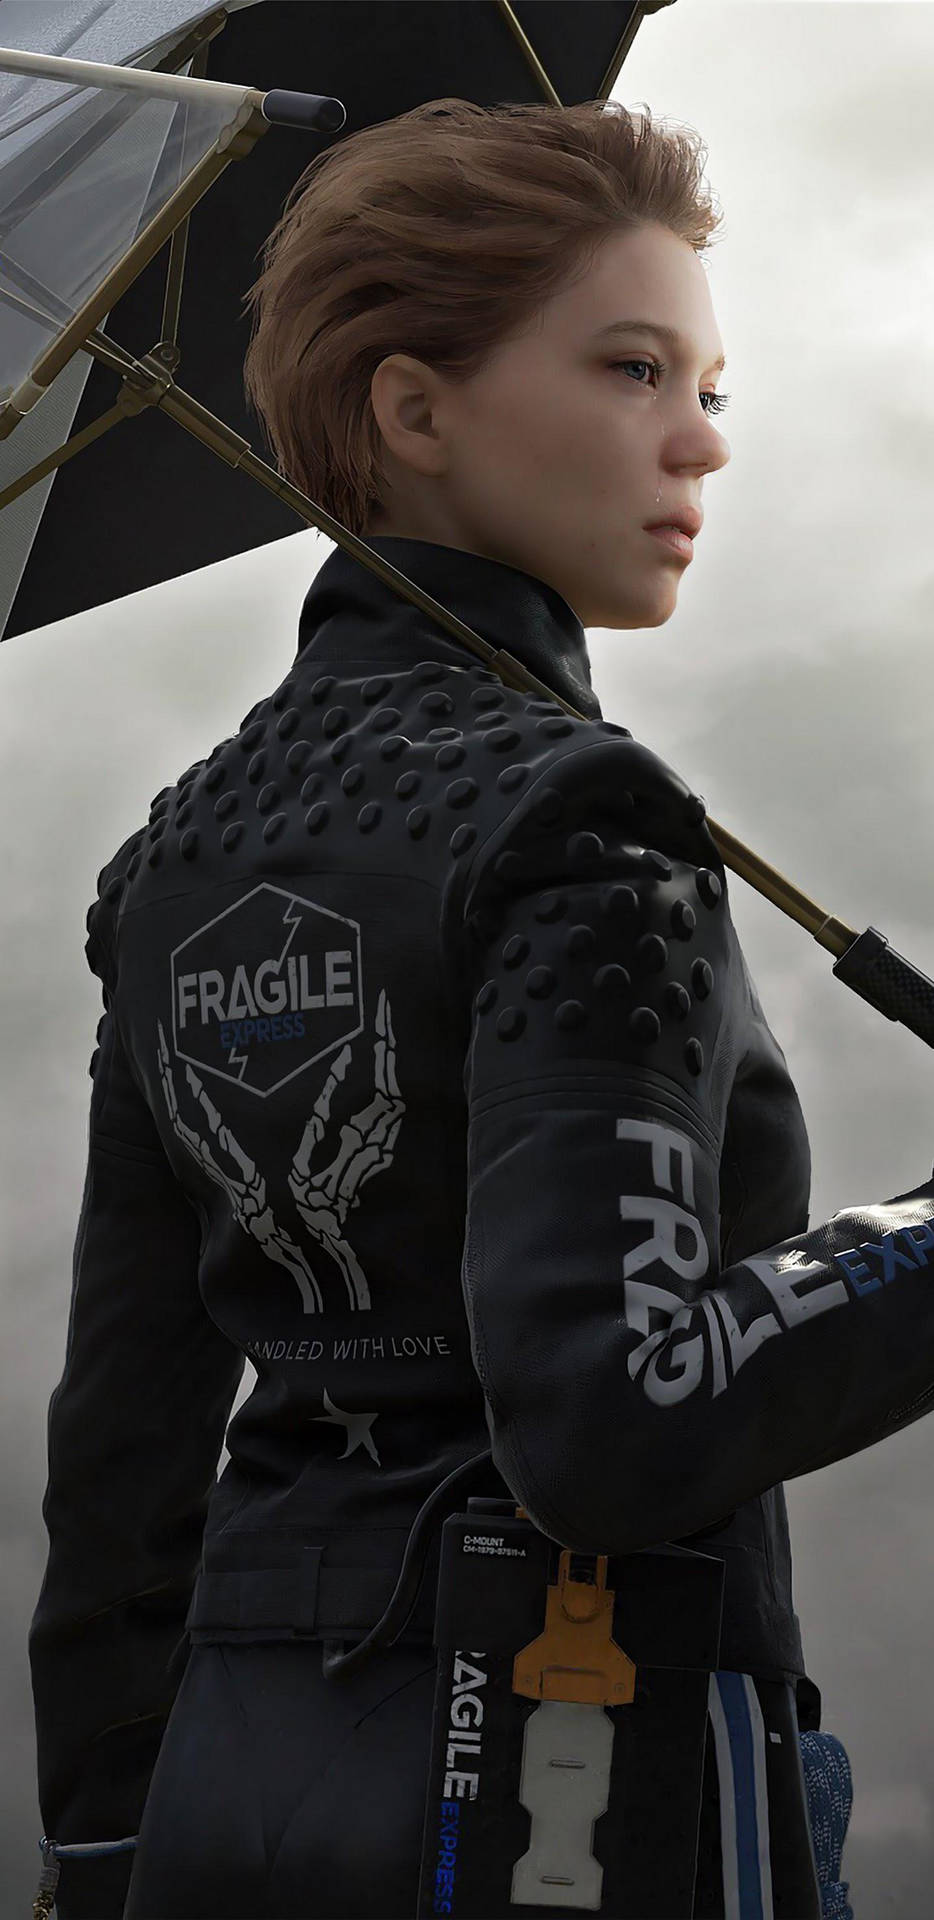 Lea Seydoux portraying Fragile in a dramatic scene Wallpaper